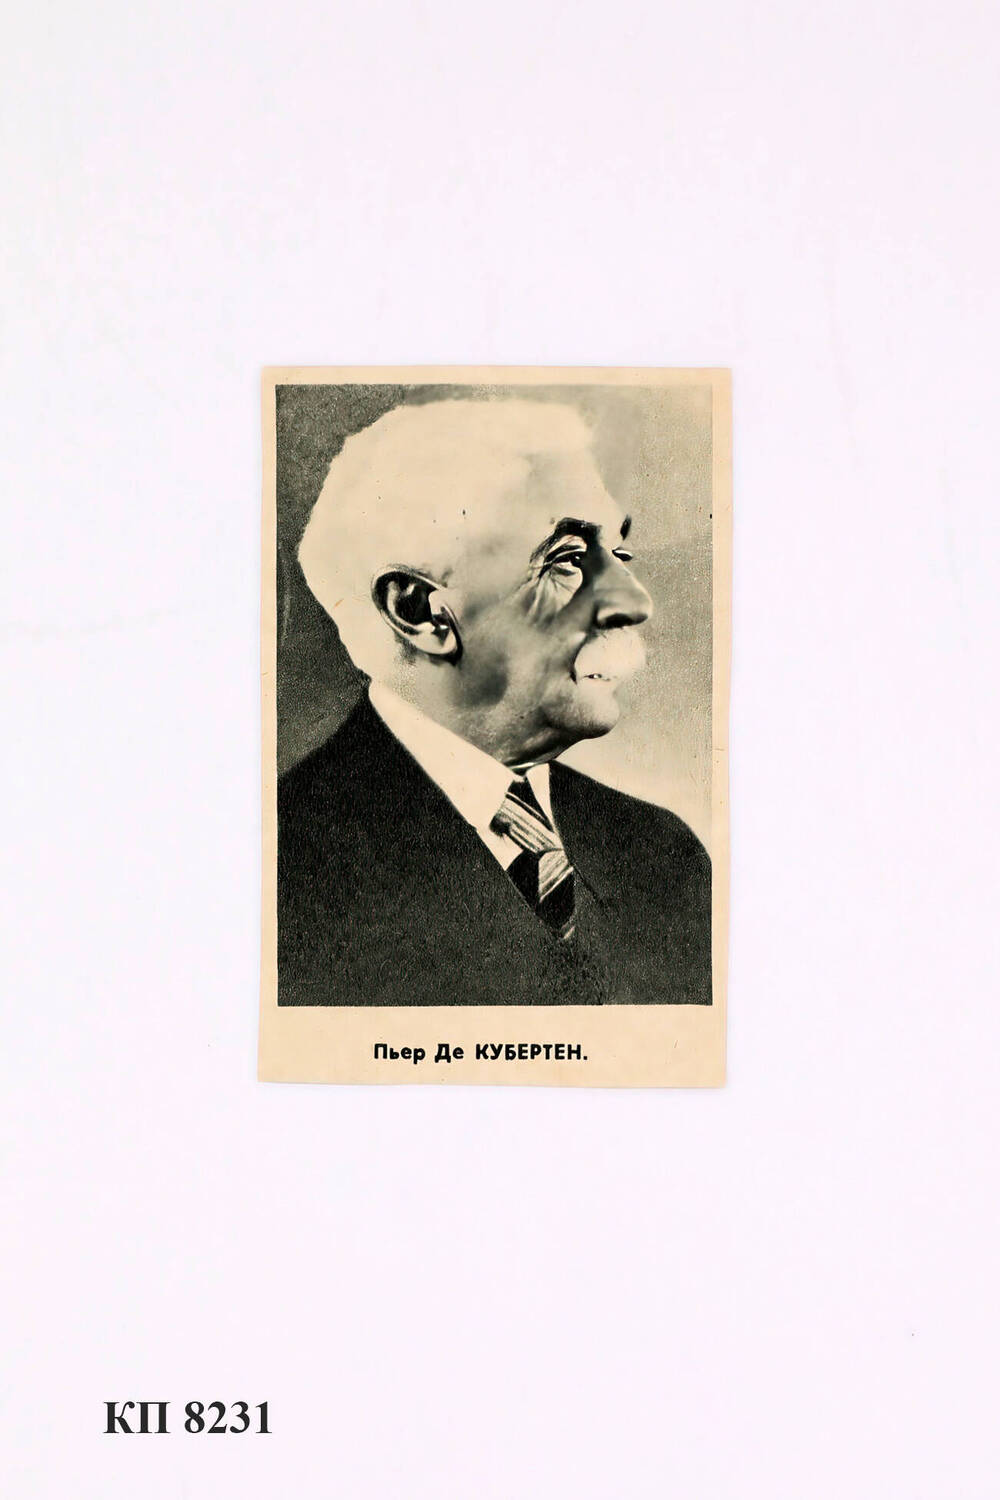 Вырезка газетная – портрет «Пьер Де КУБЕРТЕН»